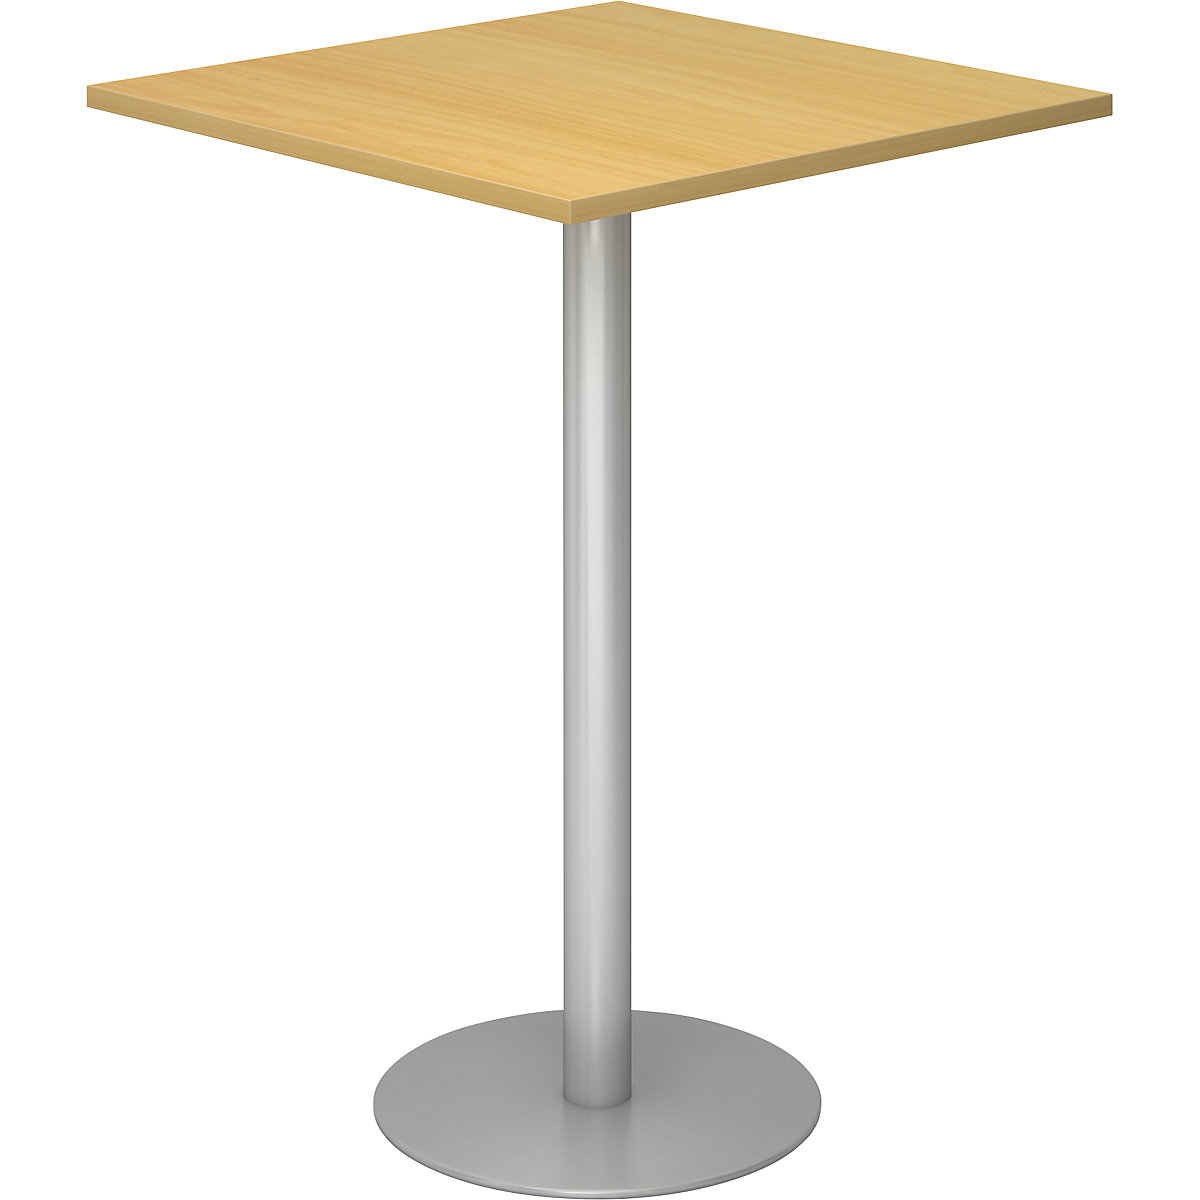 Barový stůl, d x š 800 x 800 mm, výška 1116 mm, stříbrný podstavec, deska bukový dekor